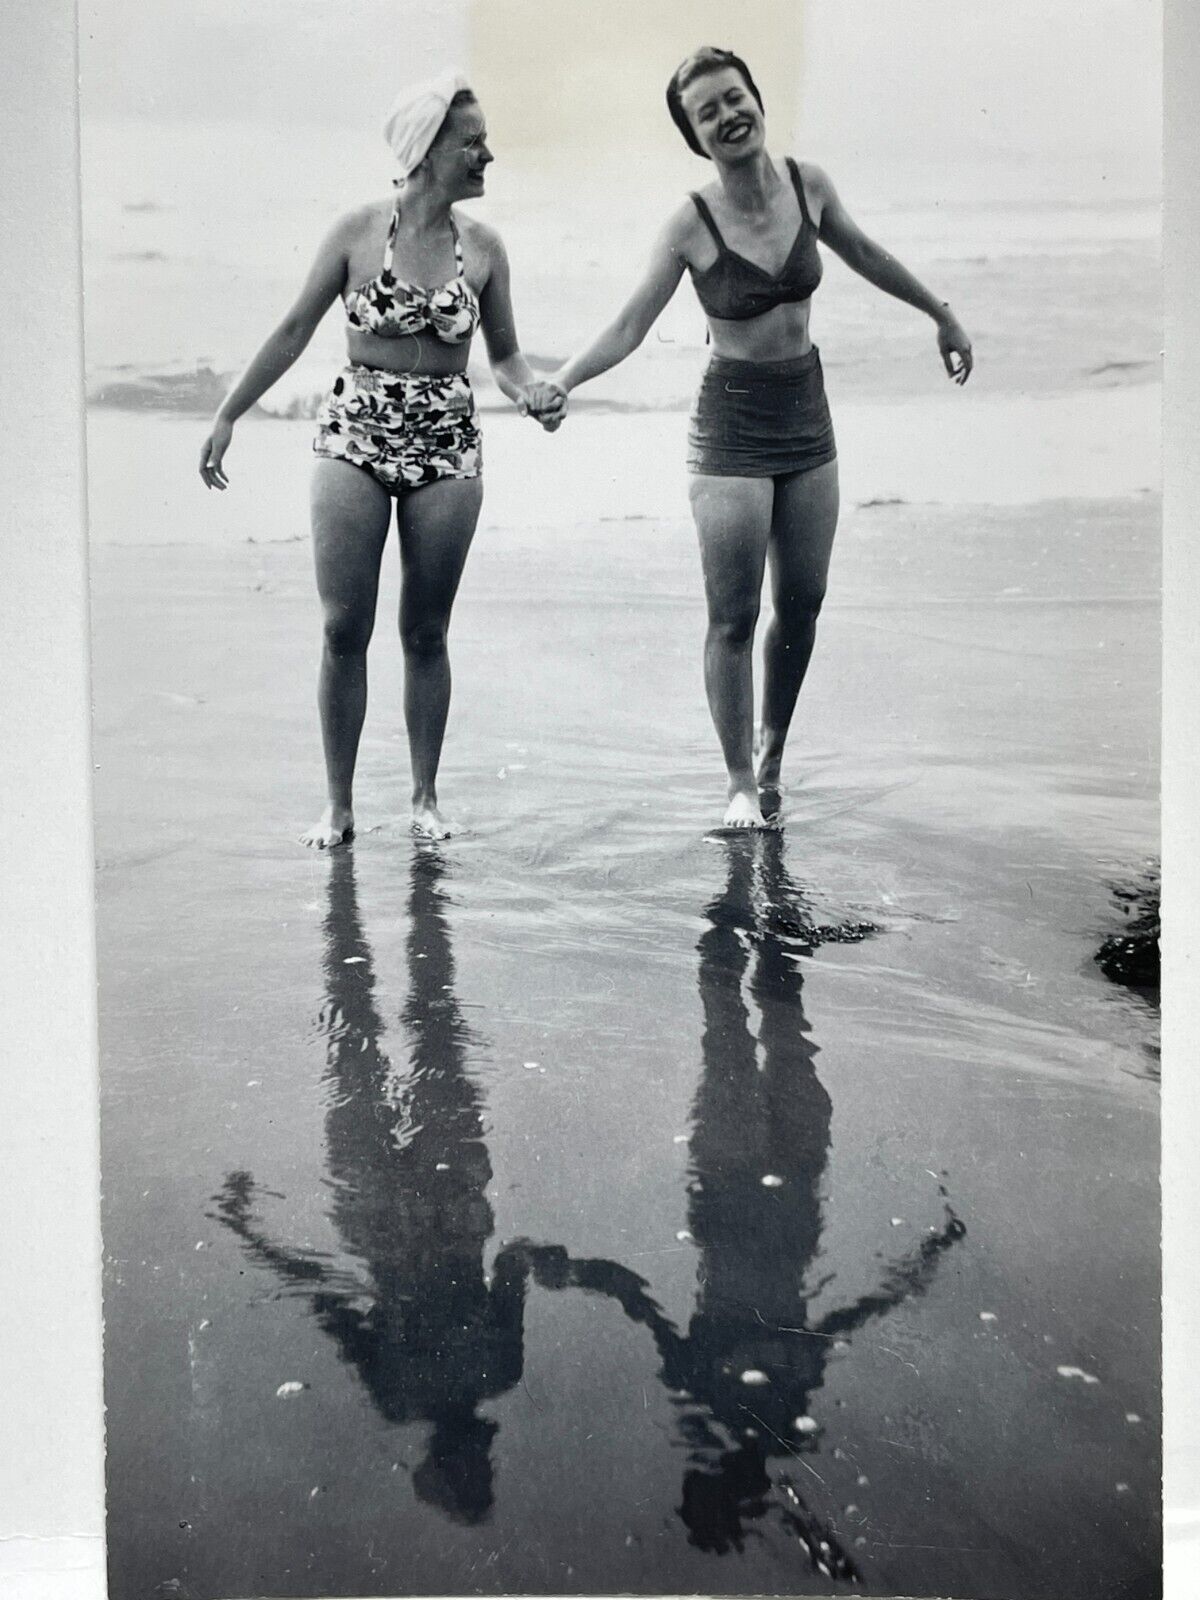 J8 1940's Beautiful Women Holding Hands Artistic Reflection Bikinis Gay Interest